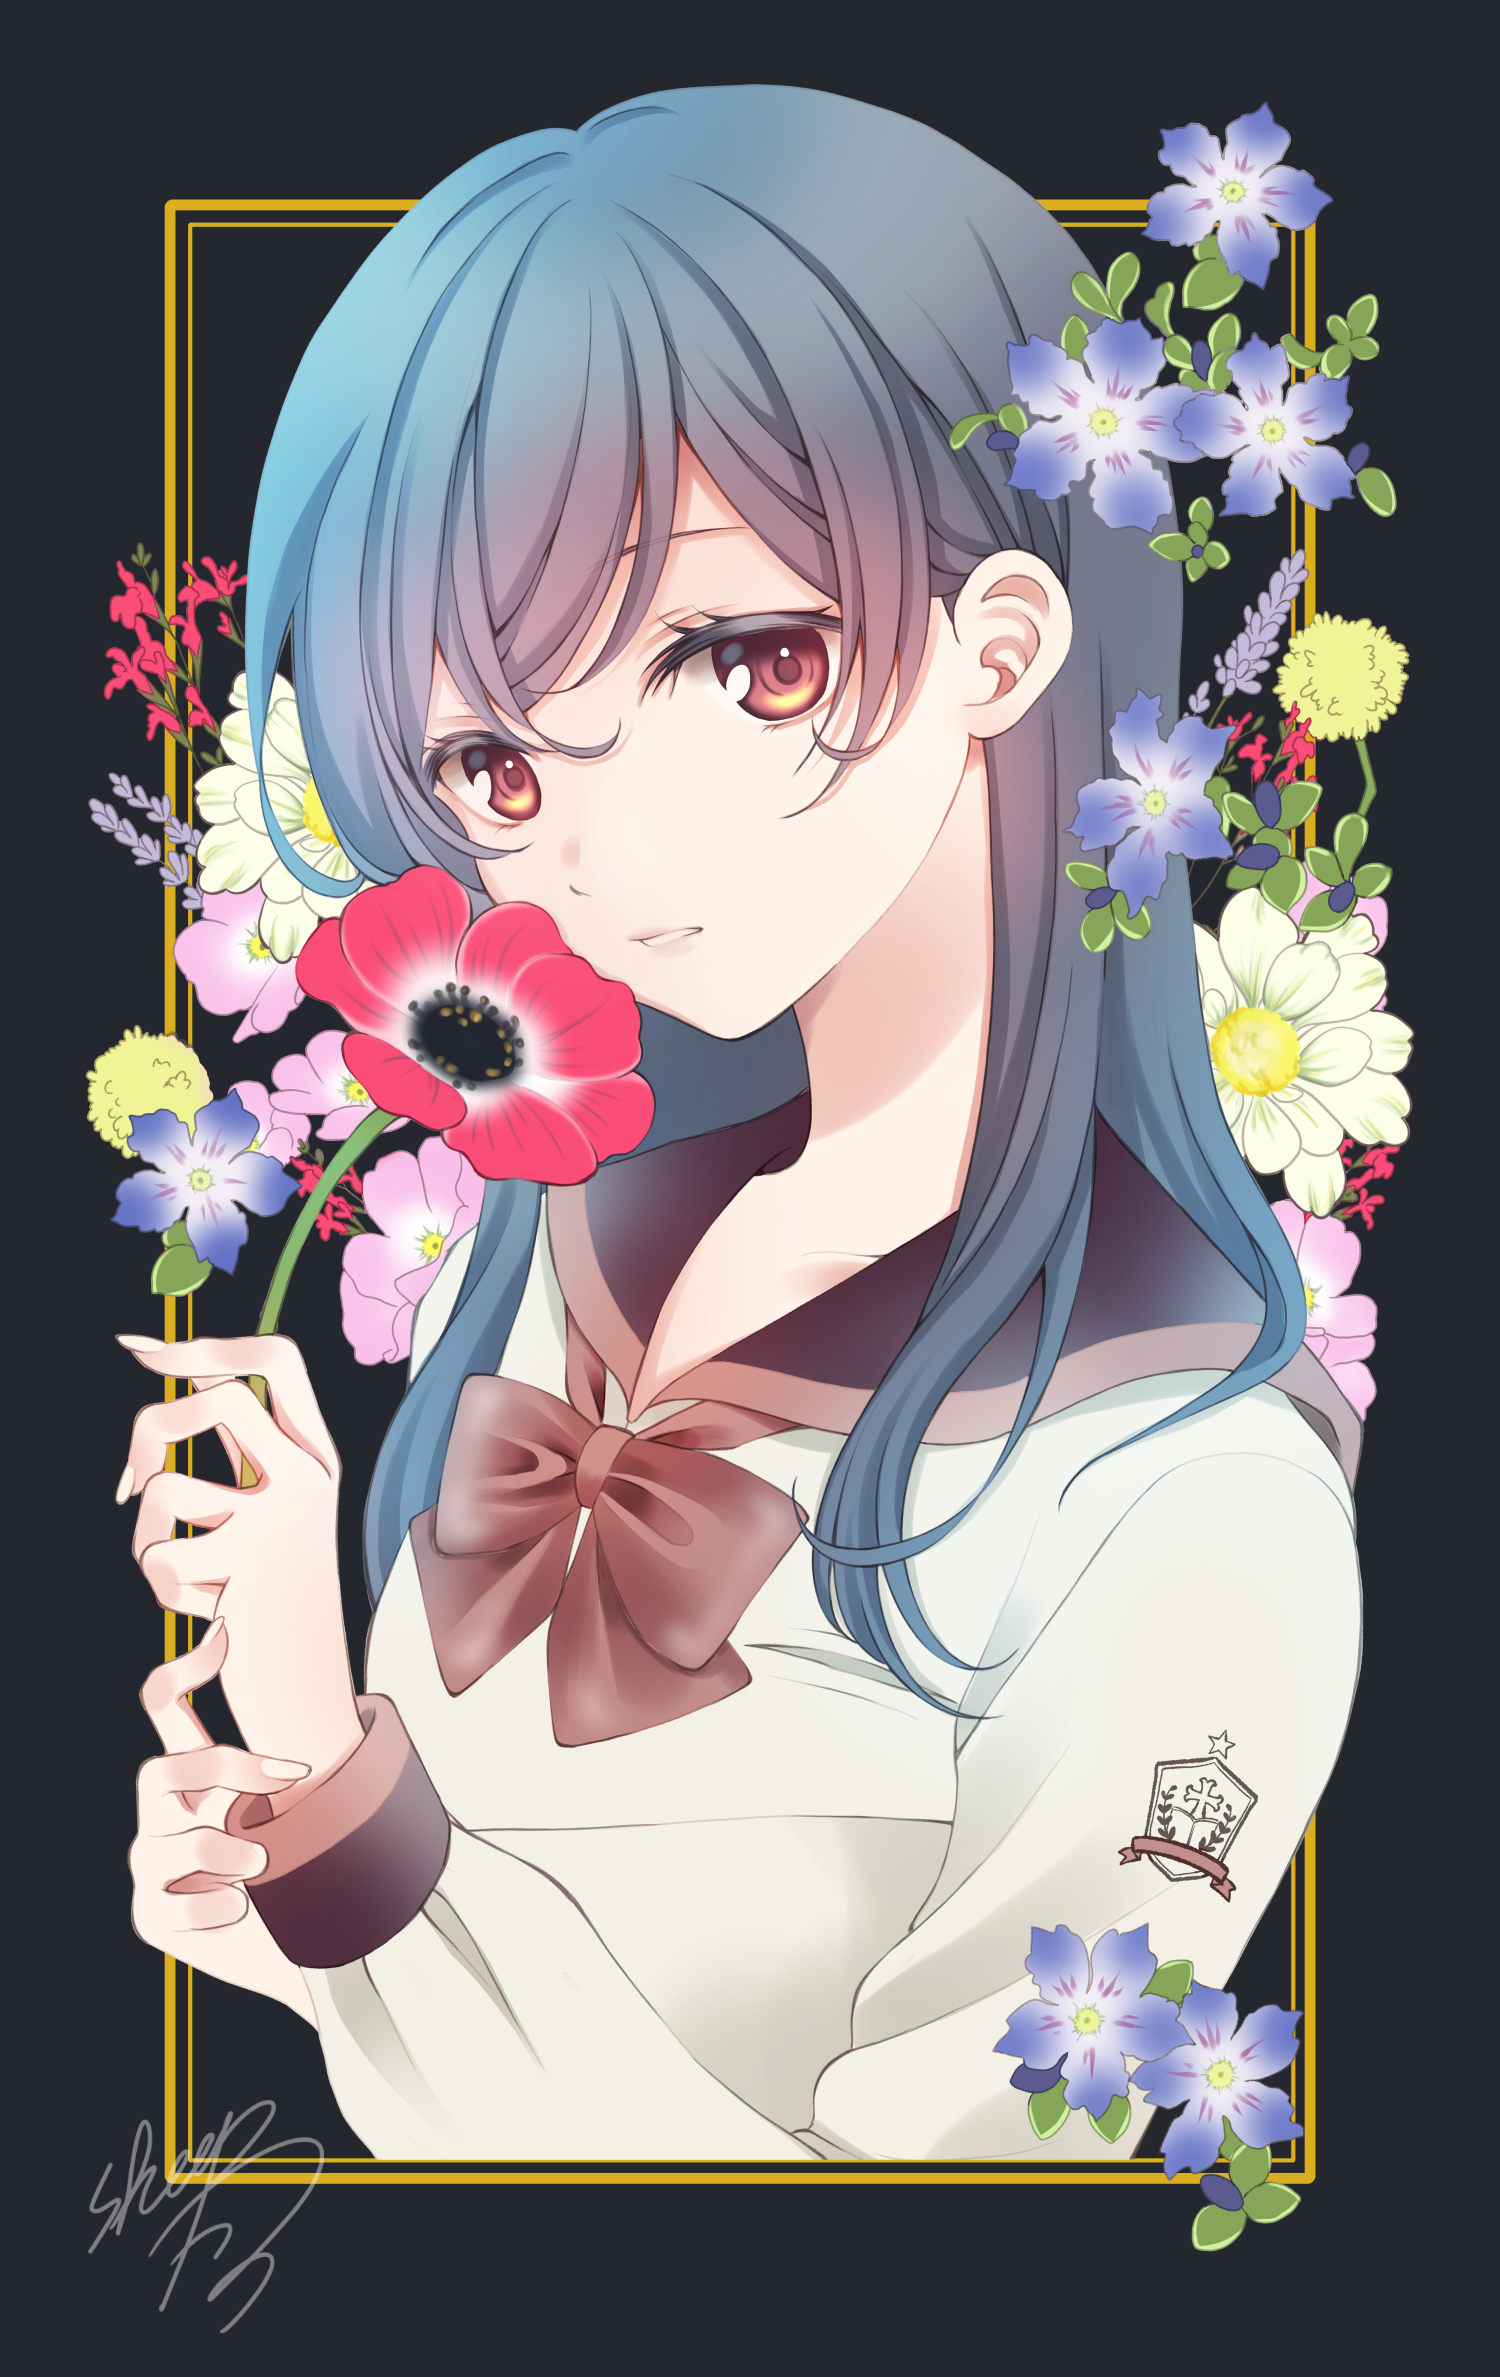 Anime 1500x2377 anime anime girls digital art artwork 2D portrait display Sheepd school uniform flowers